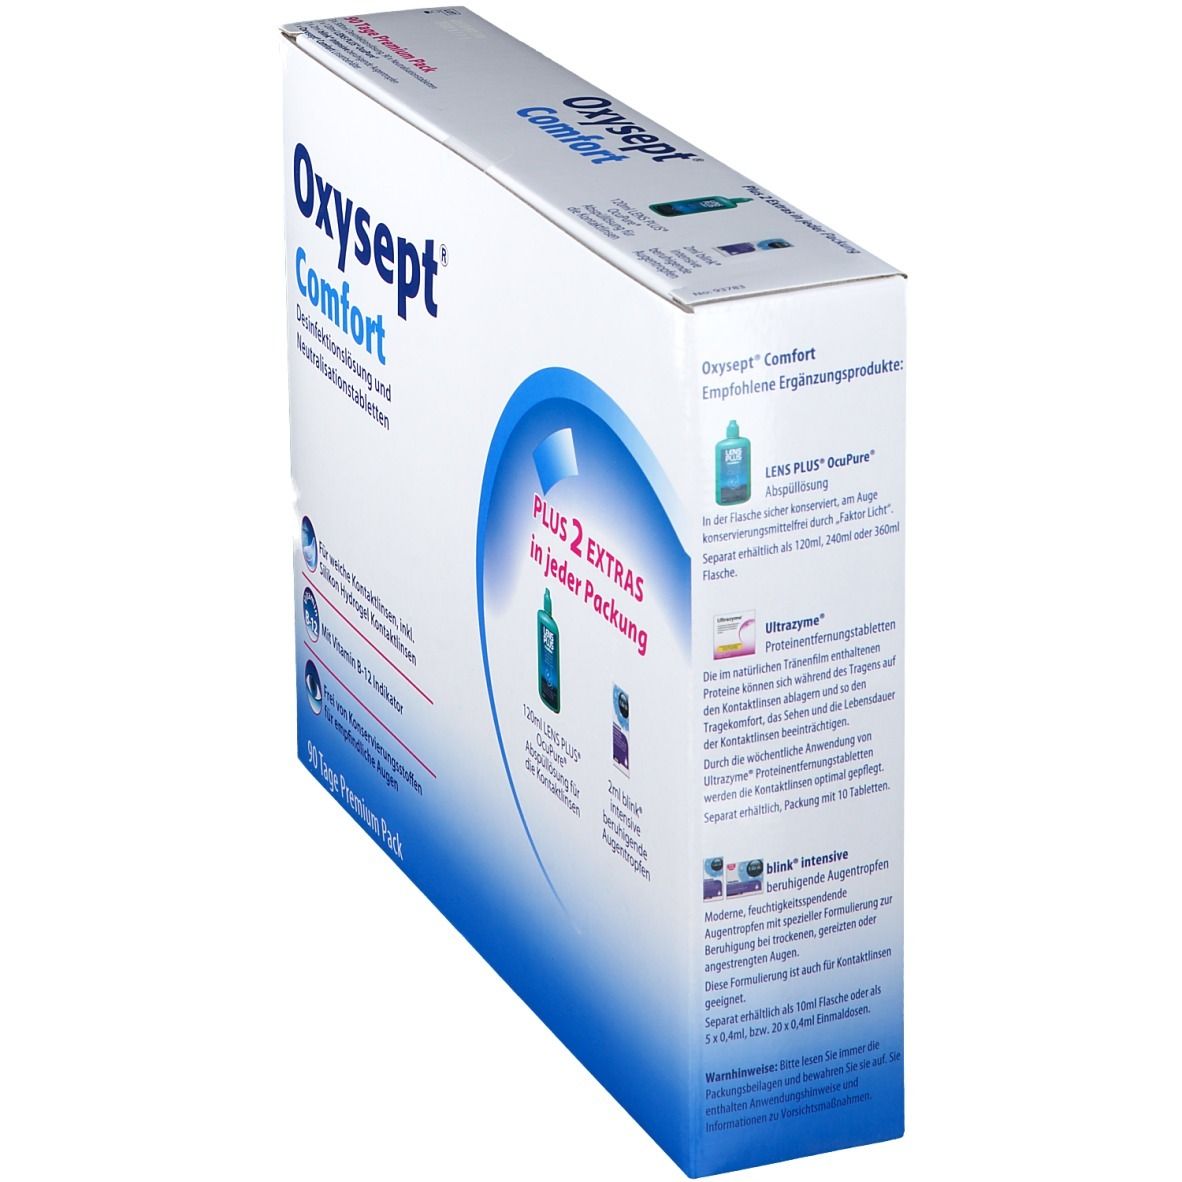 Oxysept® Comfort 90 Tage Premium Pack